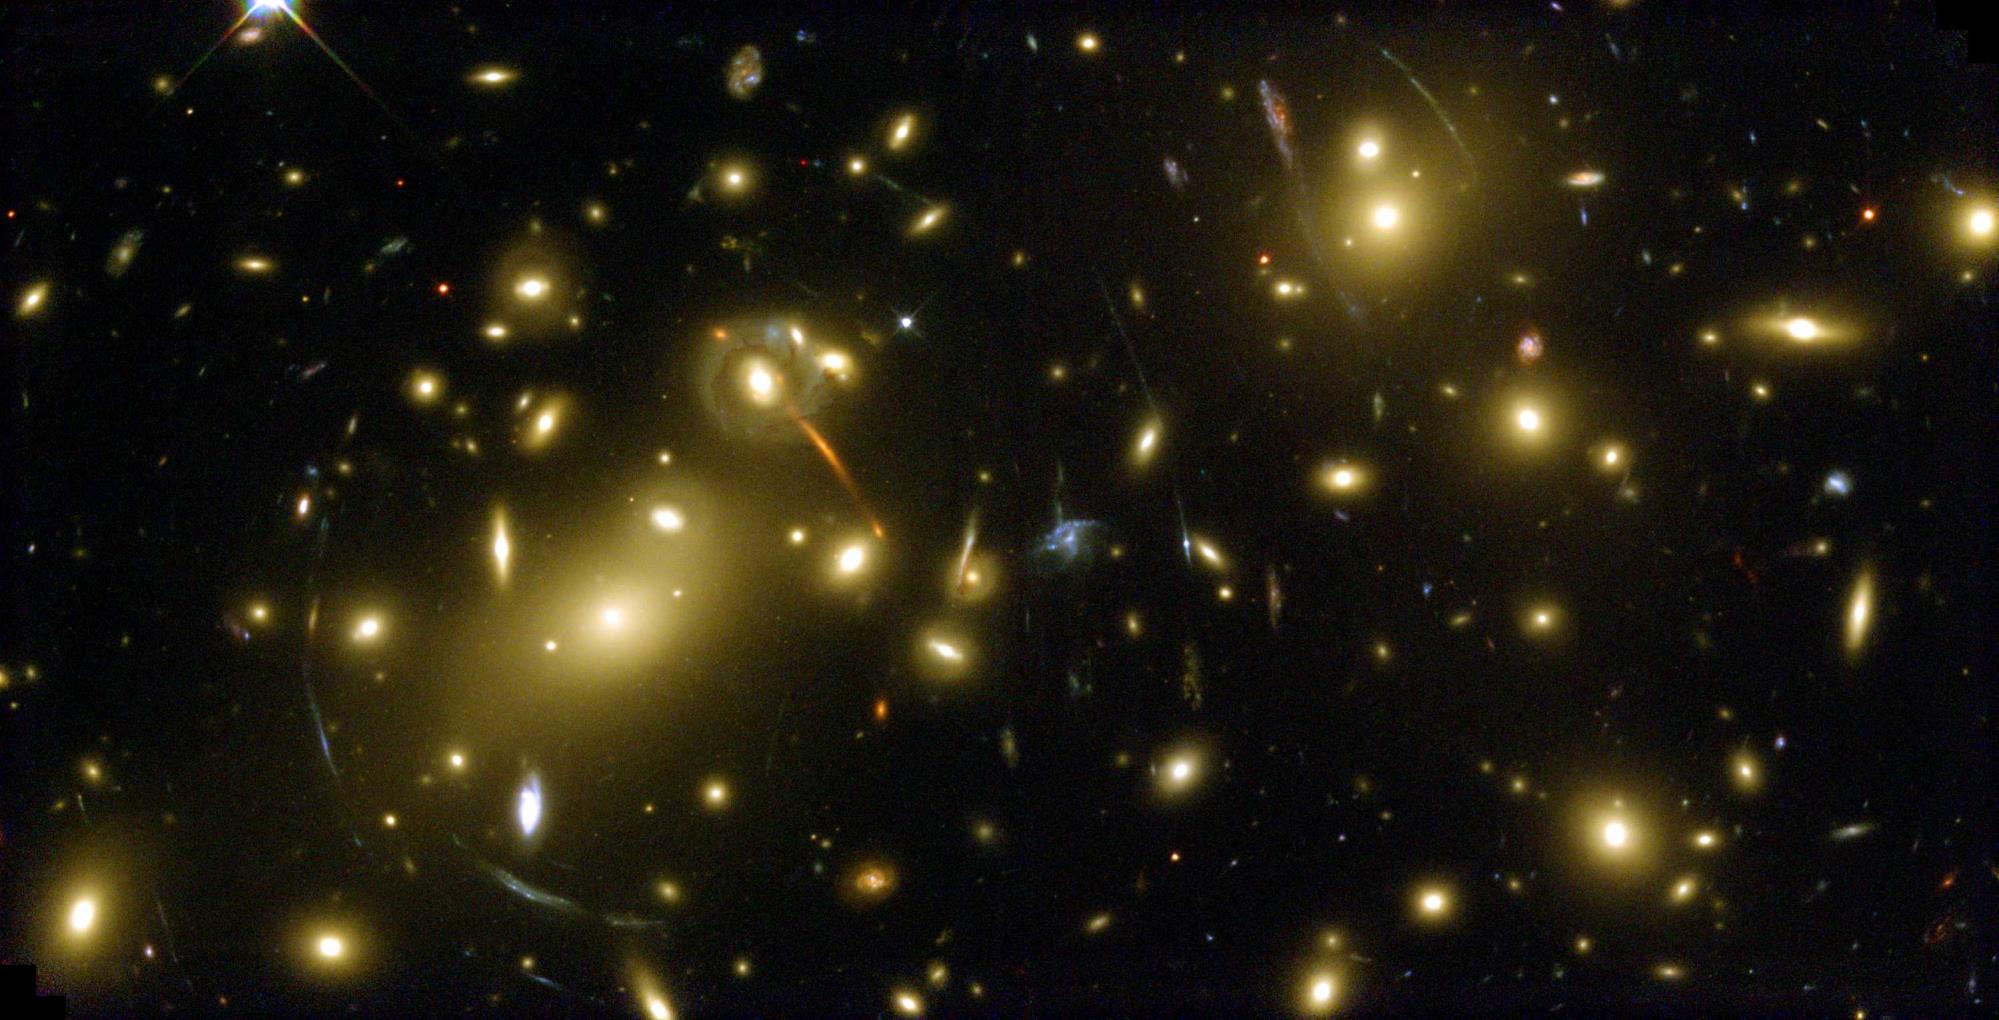 Abell 2218 Cluster van sterrenstelsels op 2 Glichtjaar afstand werkt als een sterke Einstein lens oranje: